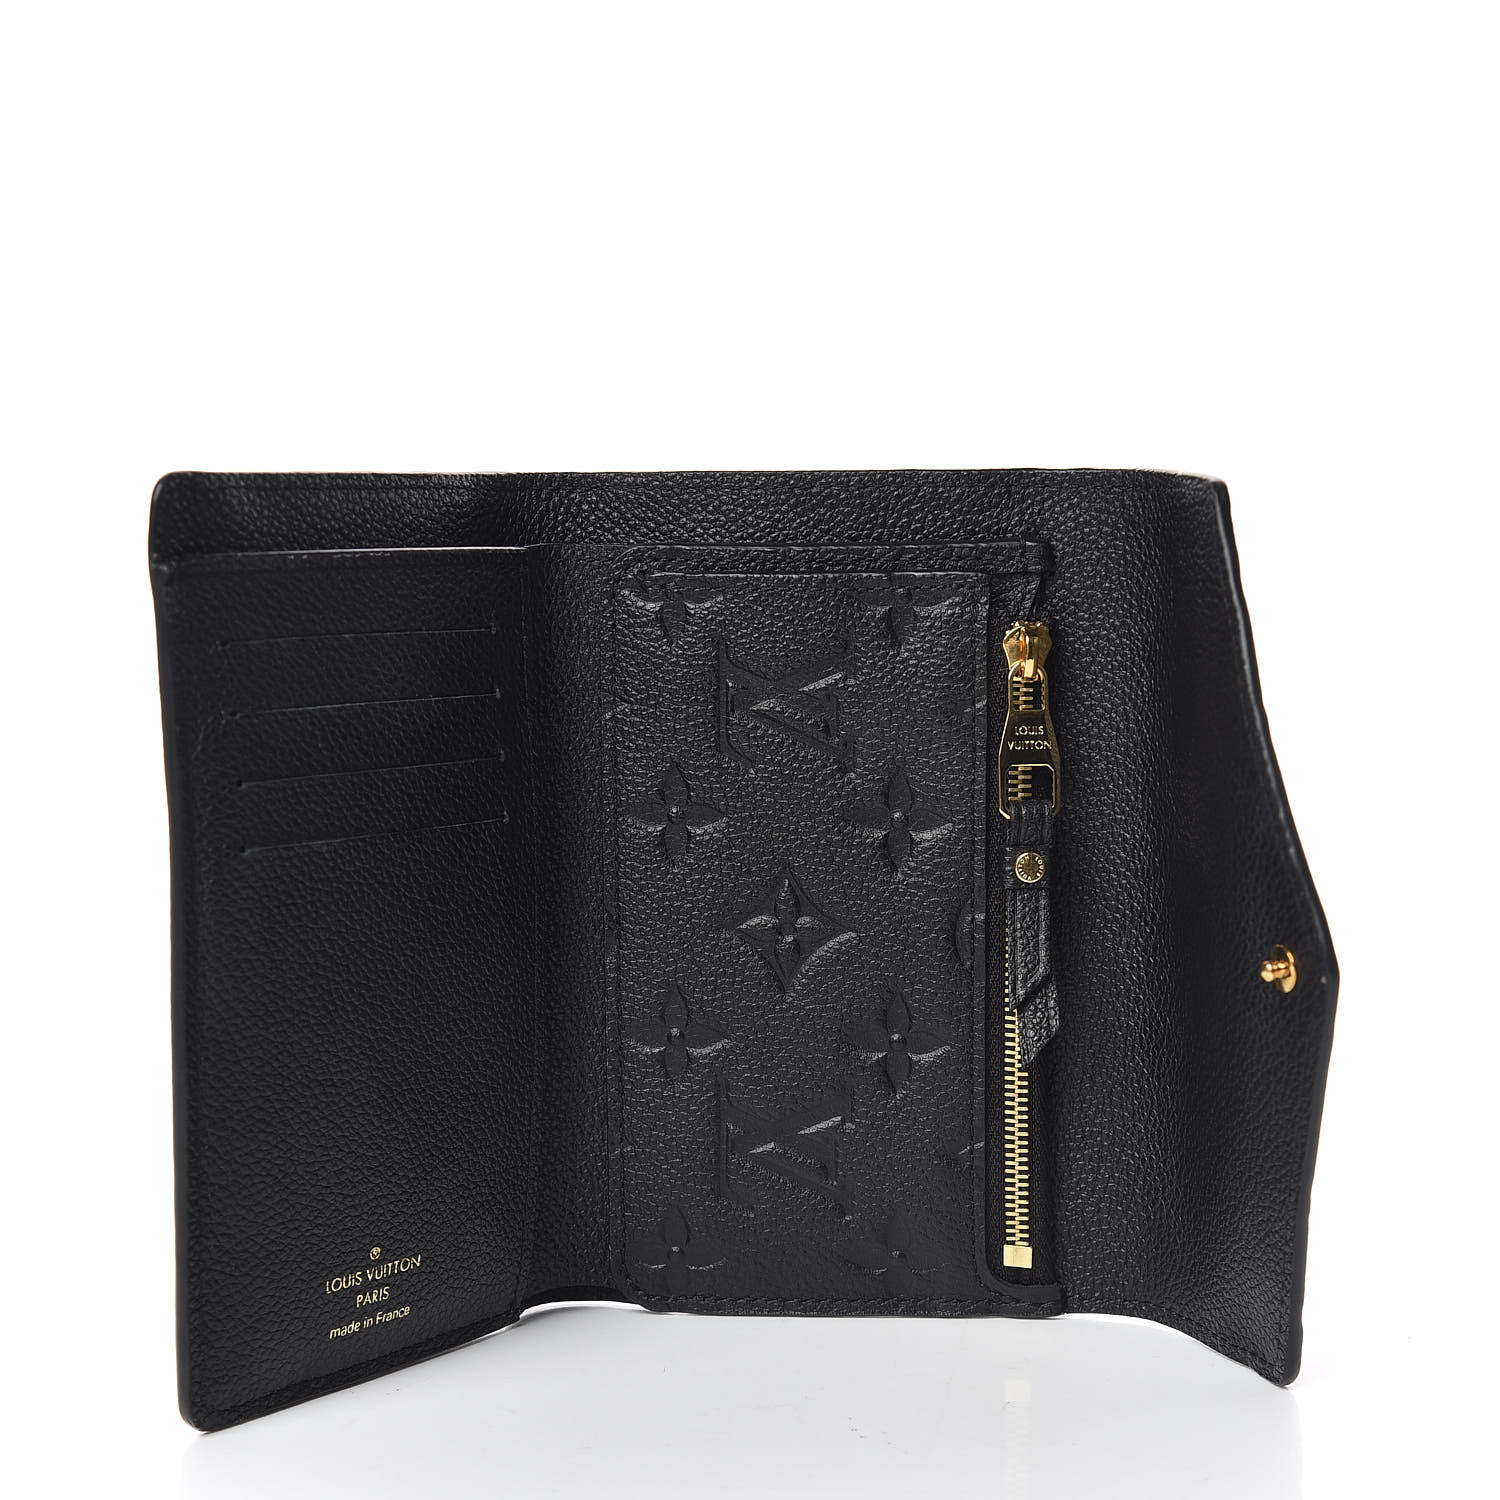 LOUIS VUITTON Empreinte Compact Curieuse Wallet Black 434800